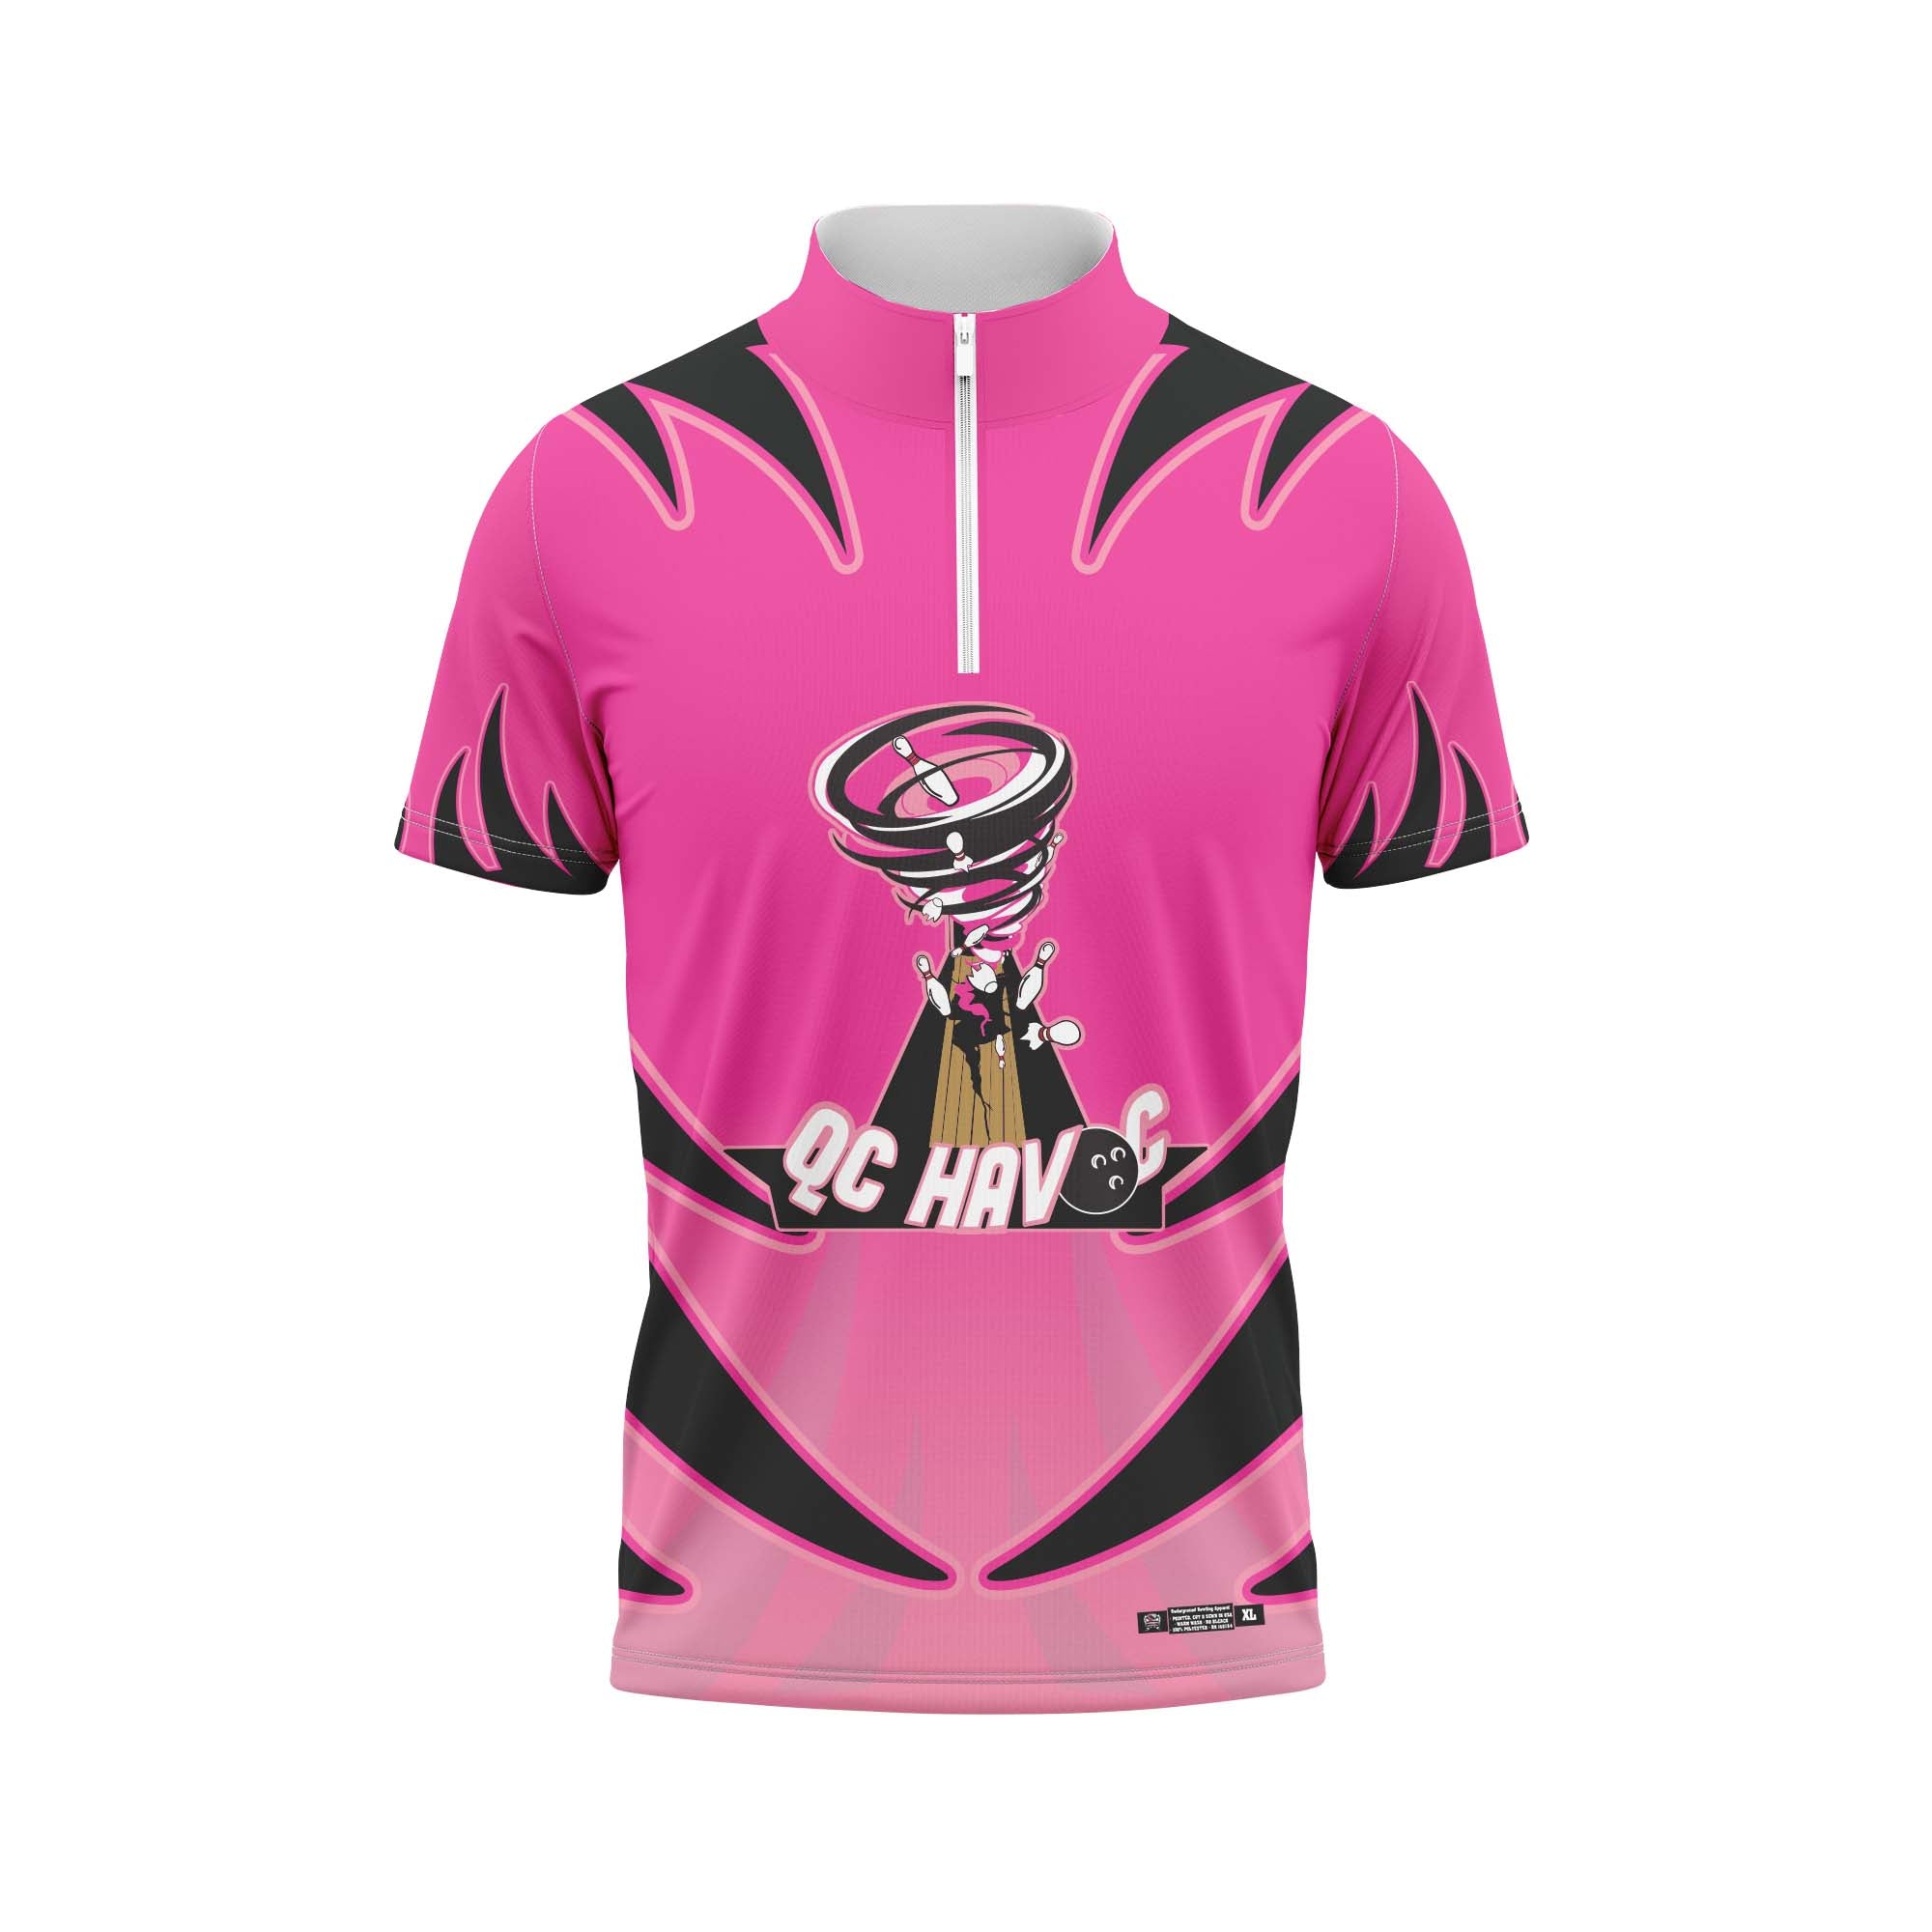 QC HAVOC Pink Jersey